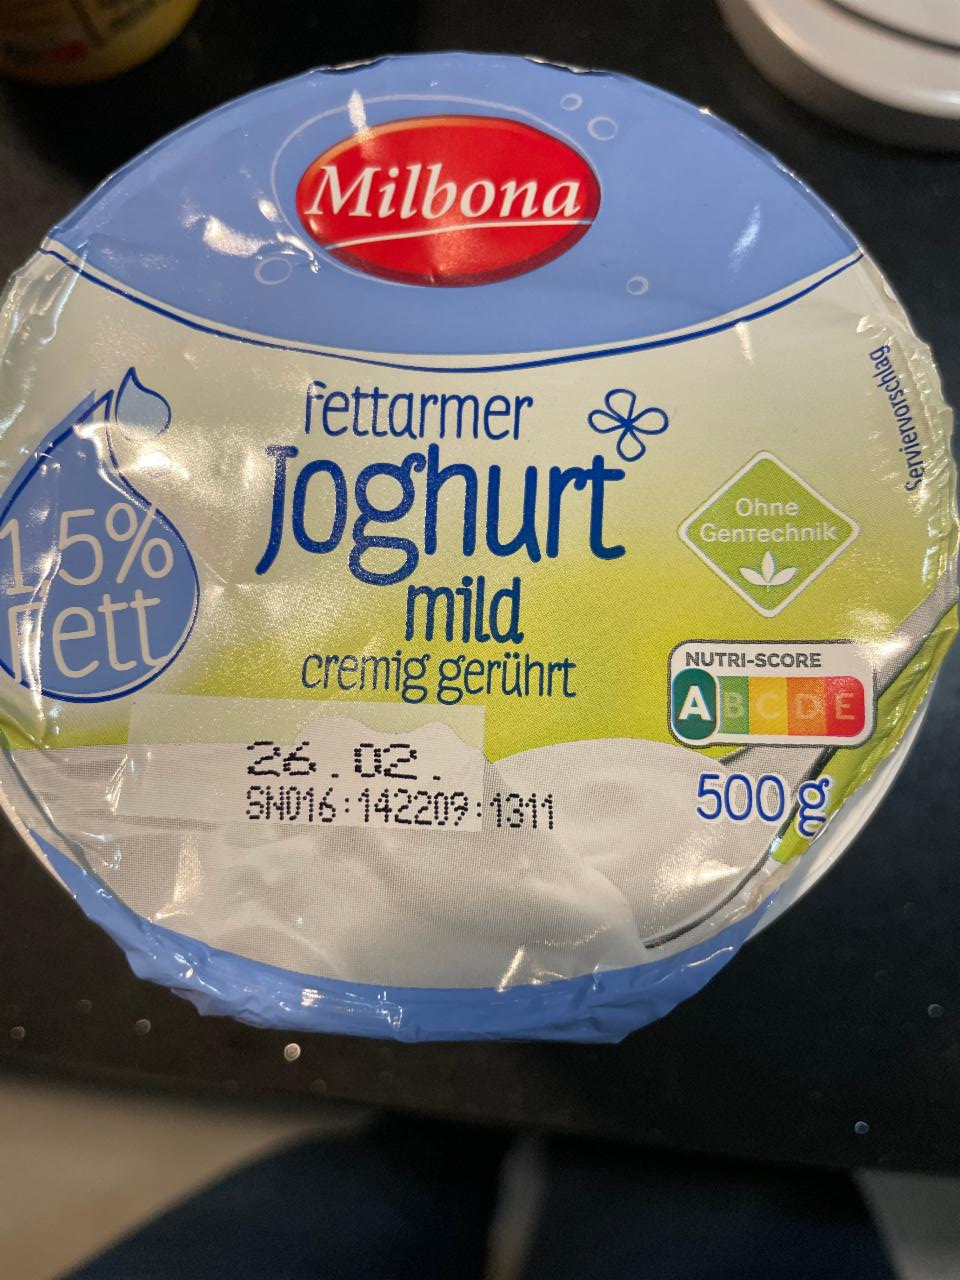 Zdjęcia - Fettarmer Joghurt mild 1,5% fett Milbona